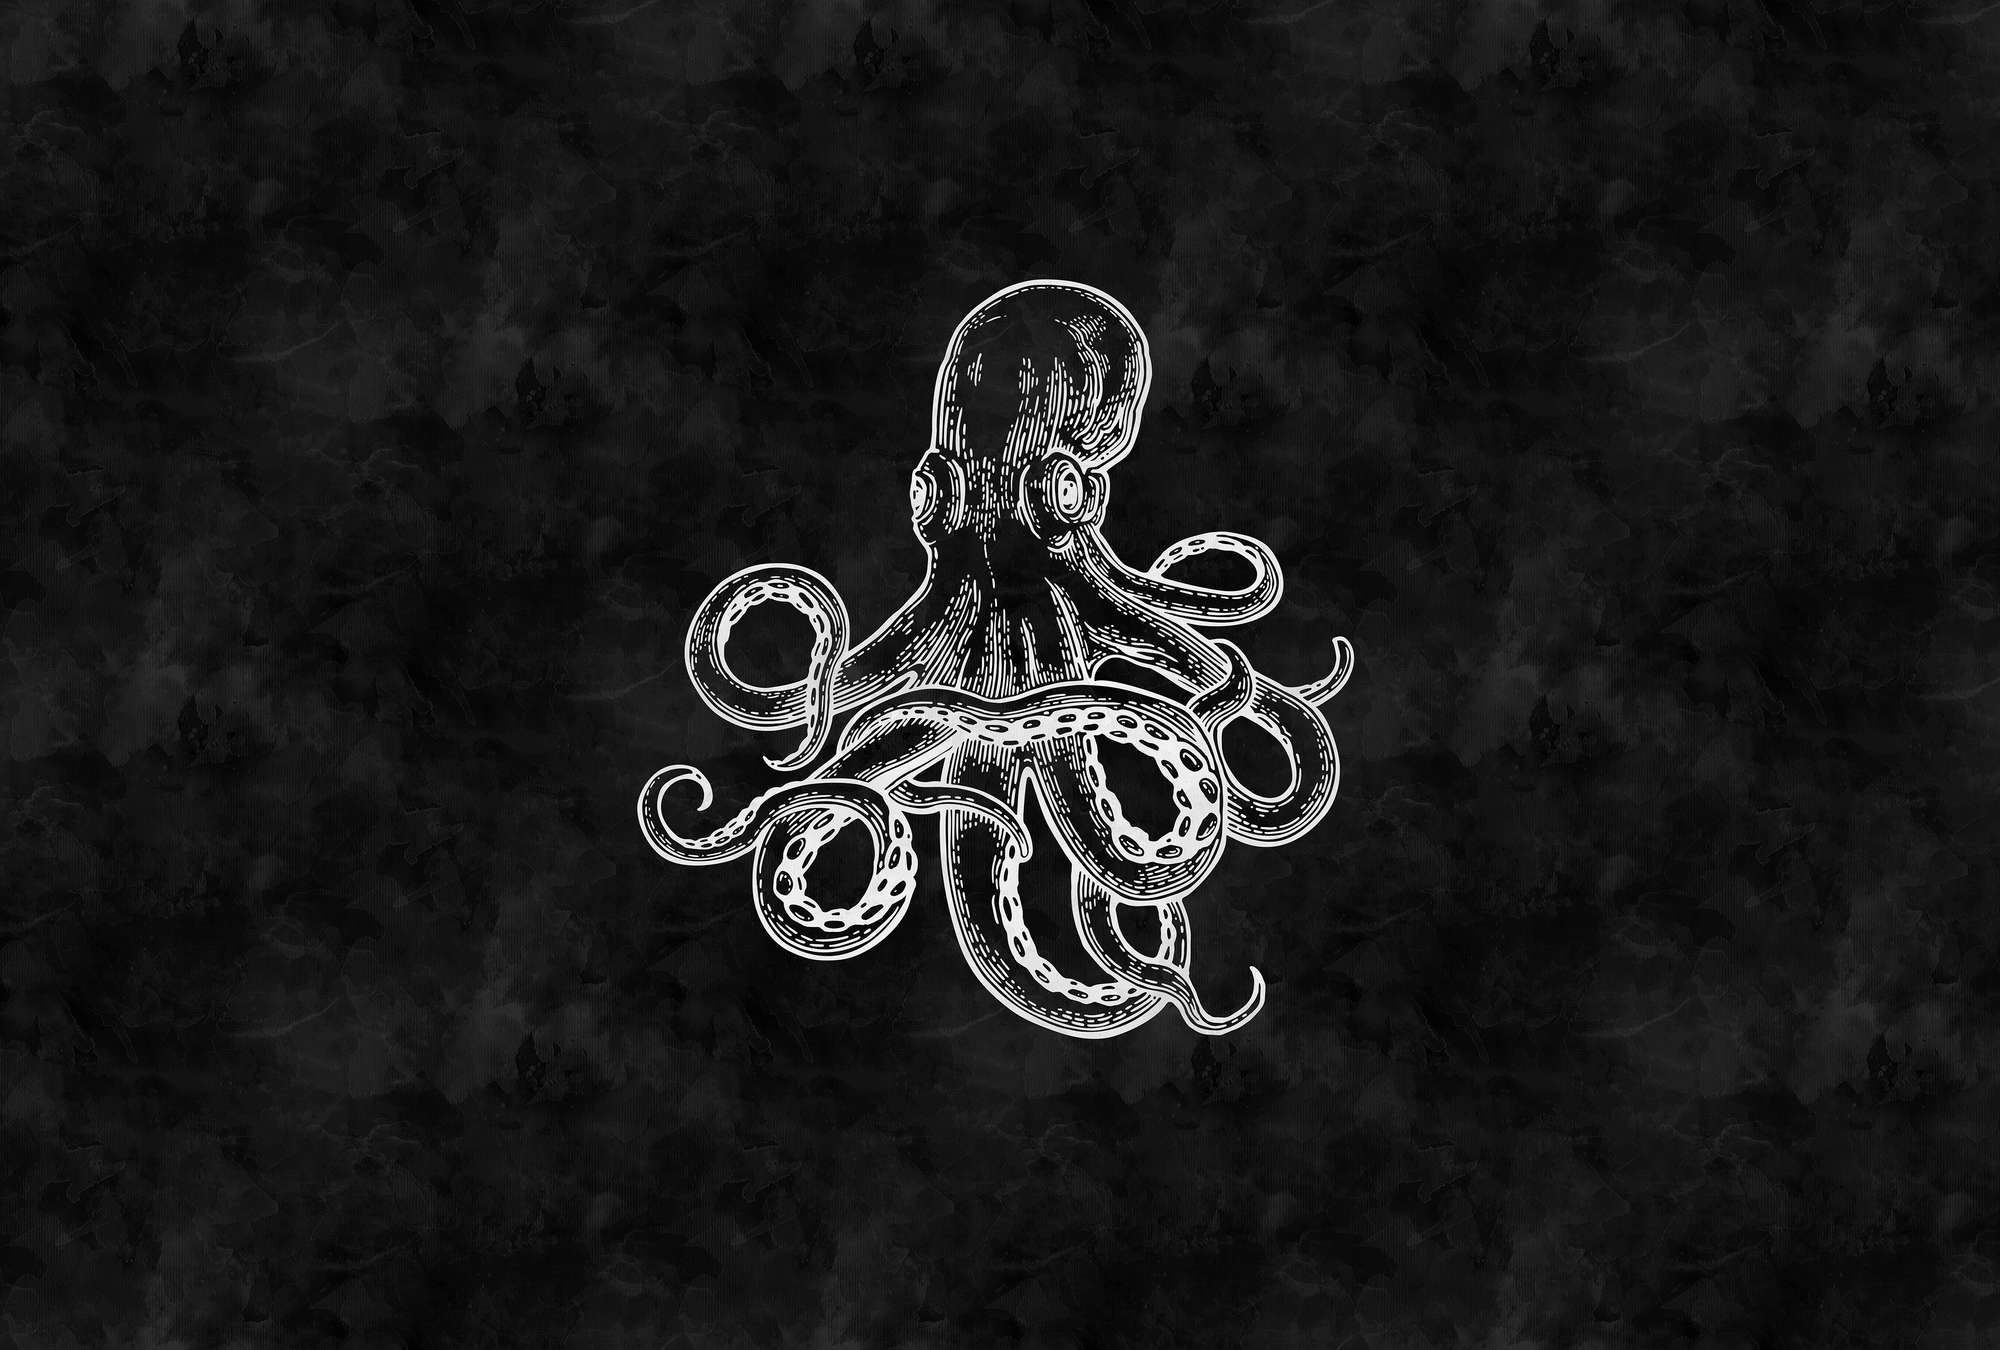             Black and white photo wallpaper octopus & blackboard look
        